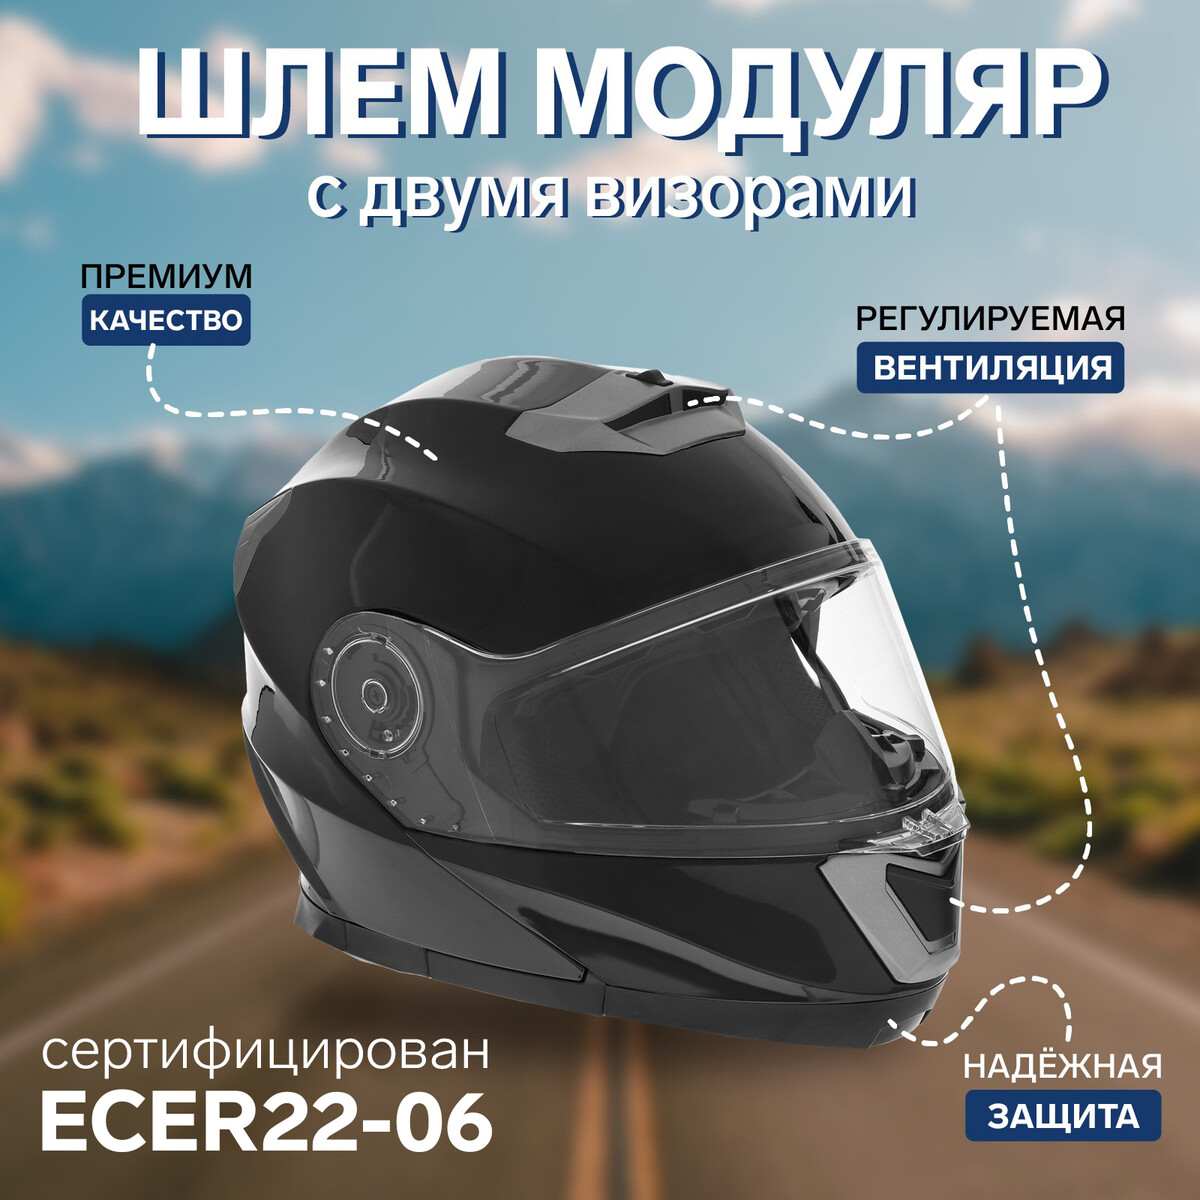 Шлем модуляр с двумя визорами, размер xl (60-61), модель - bld-160e, черный глянцевый